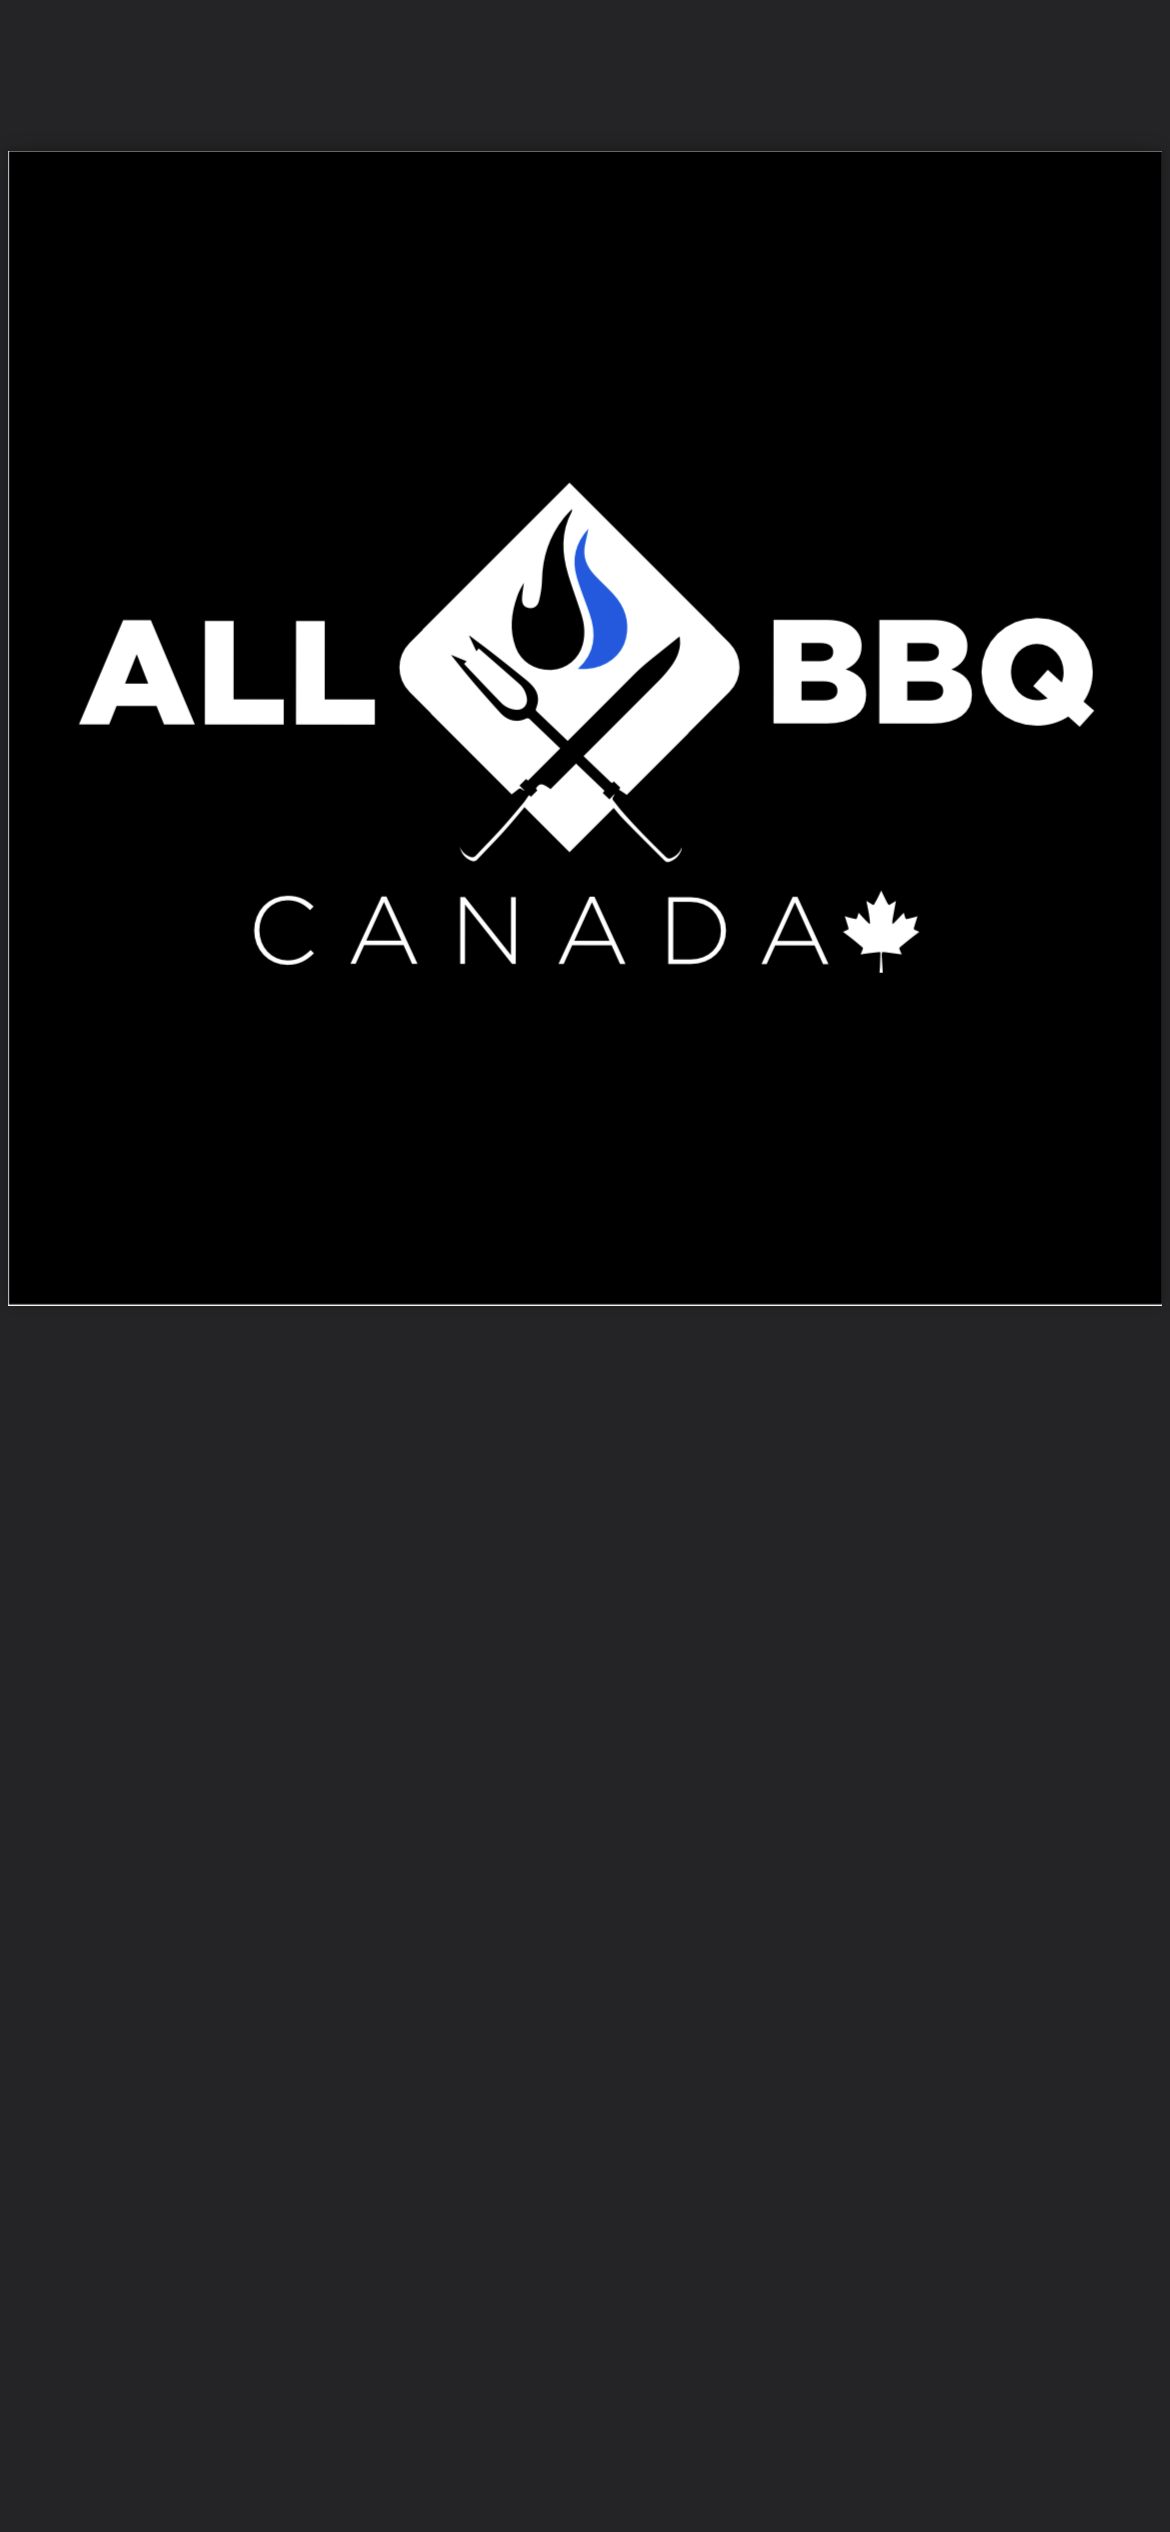 All BBQ Canada